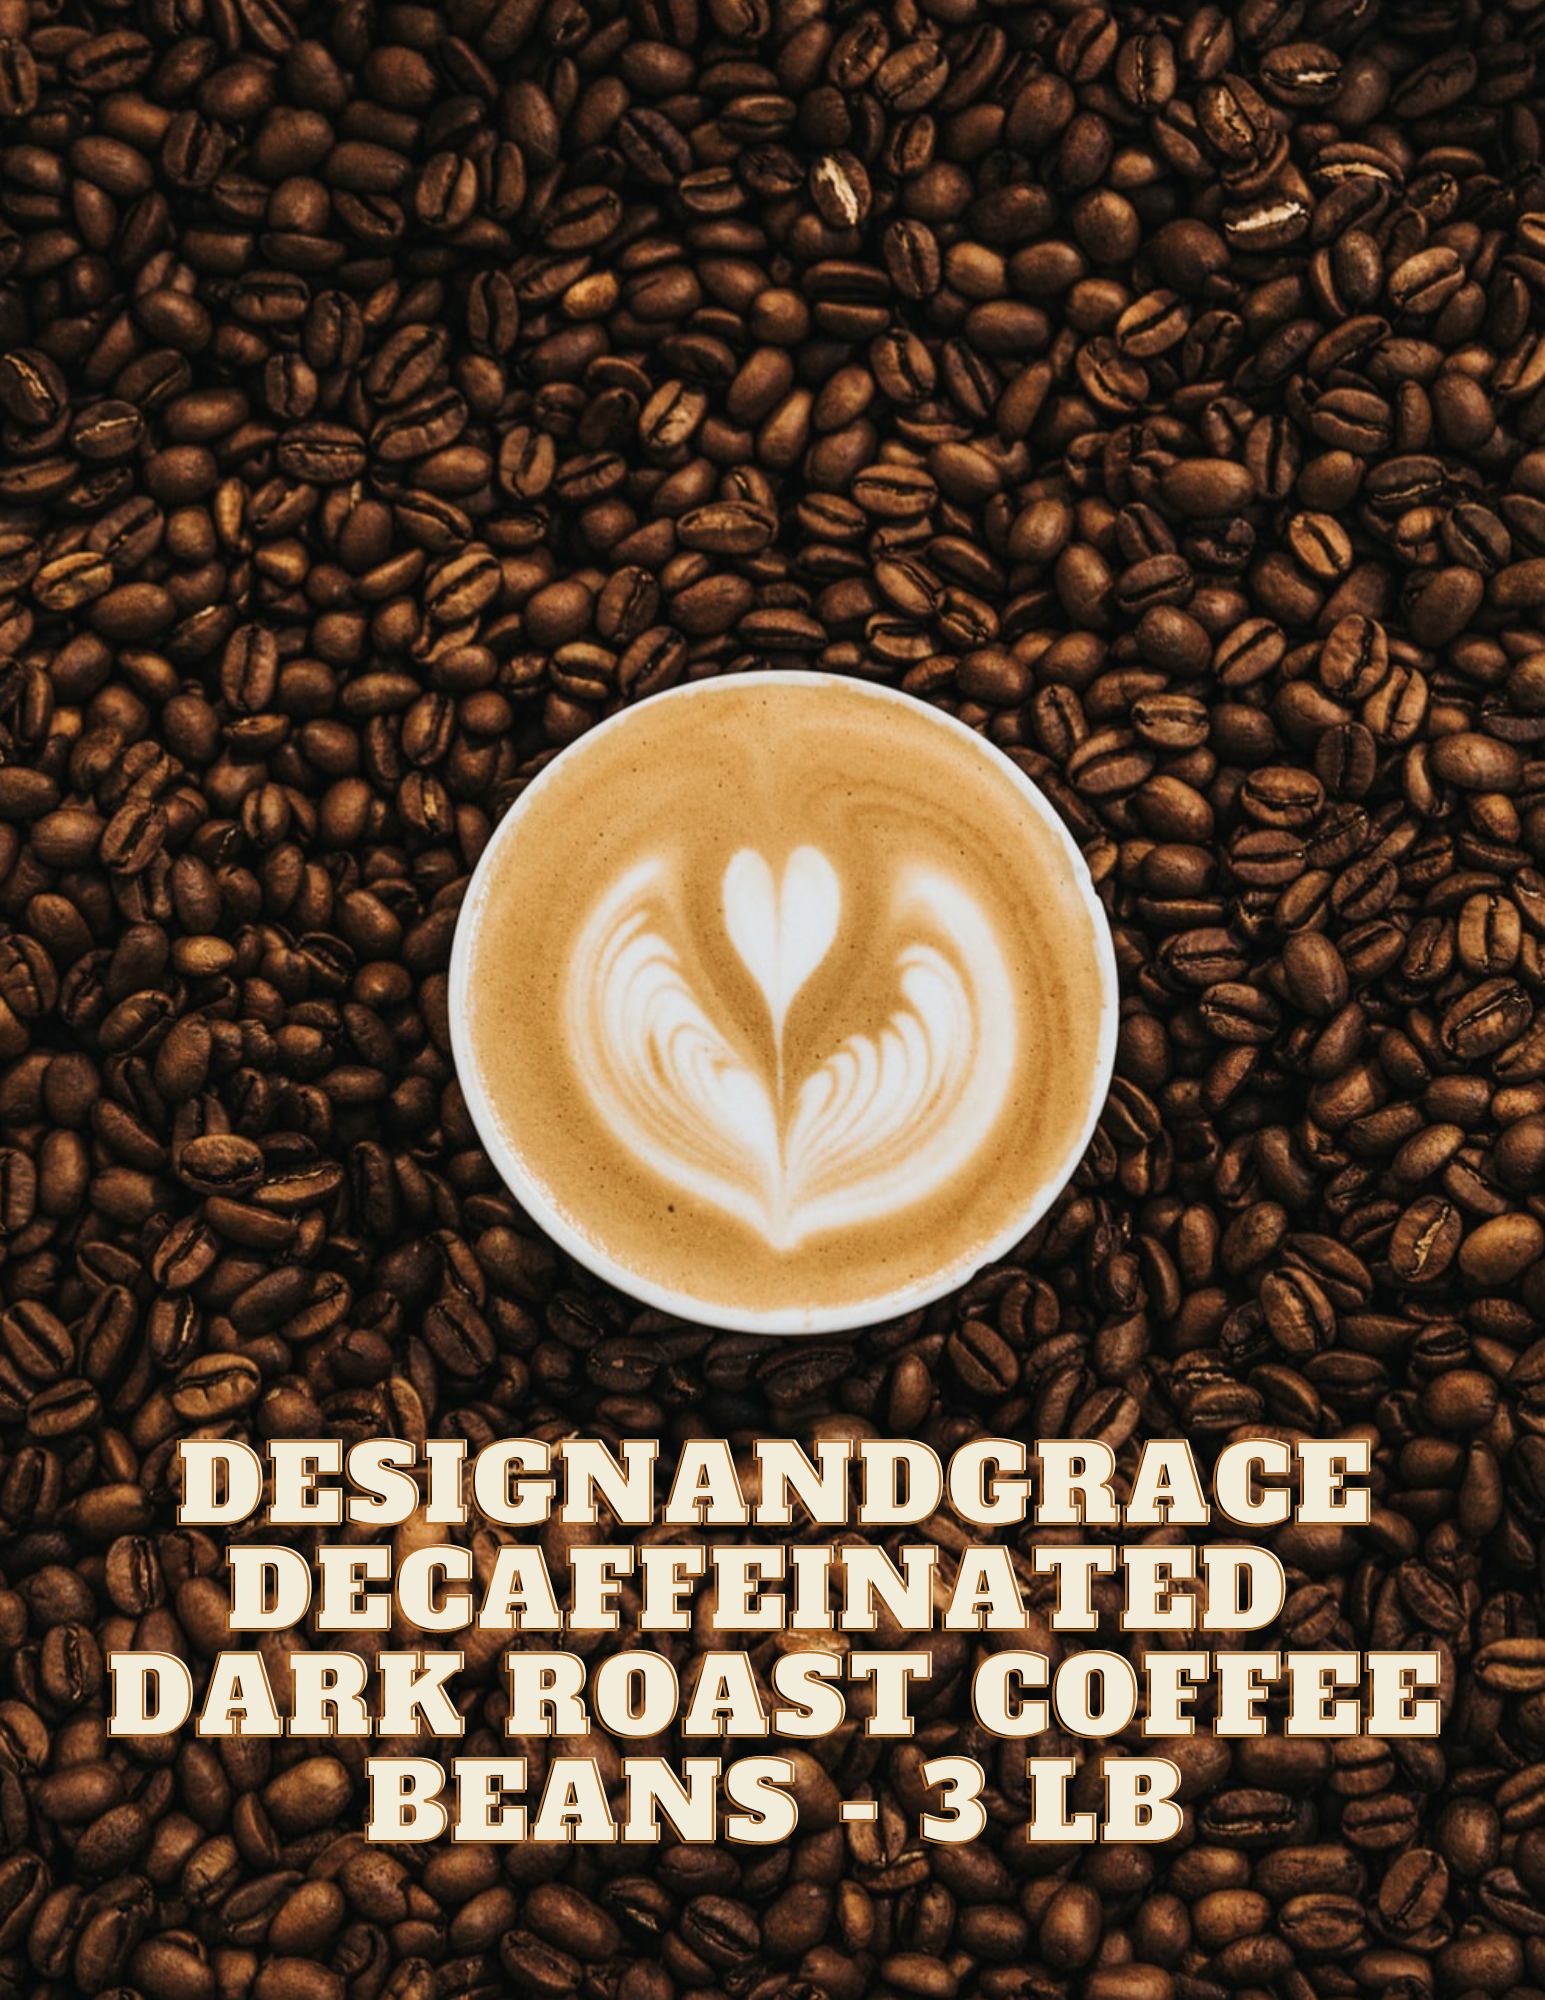 DesignandGrace Decaffeinated Dark Roast Coffee Beans - 3 lb